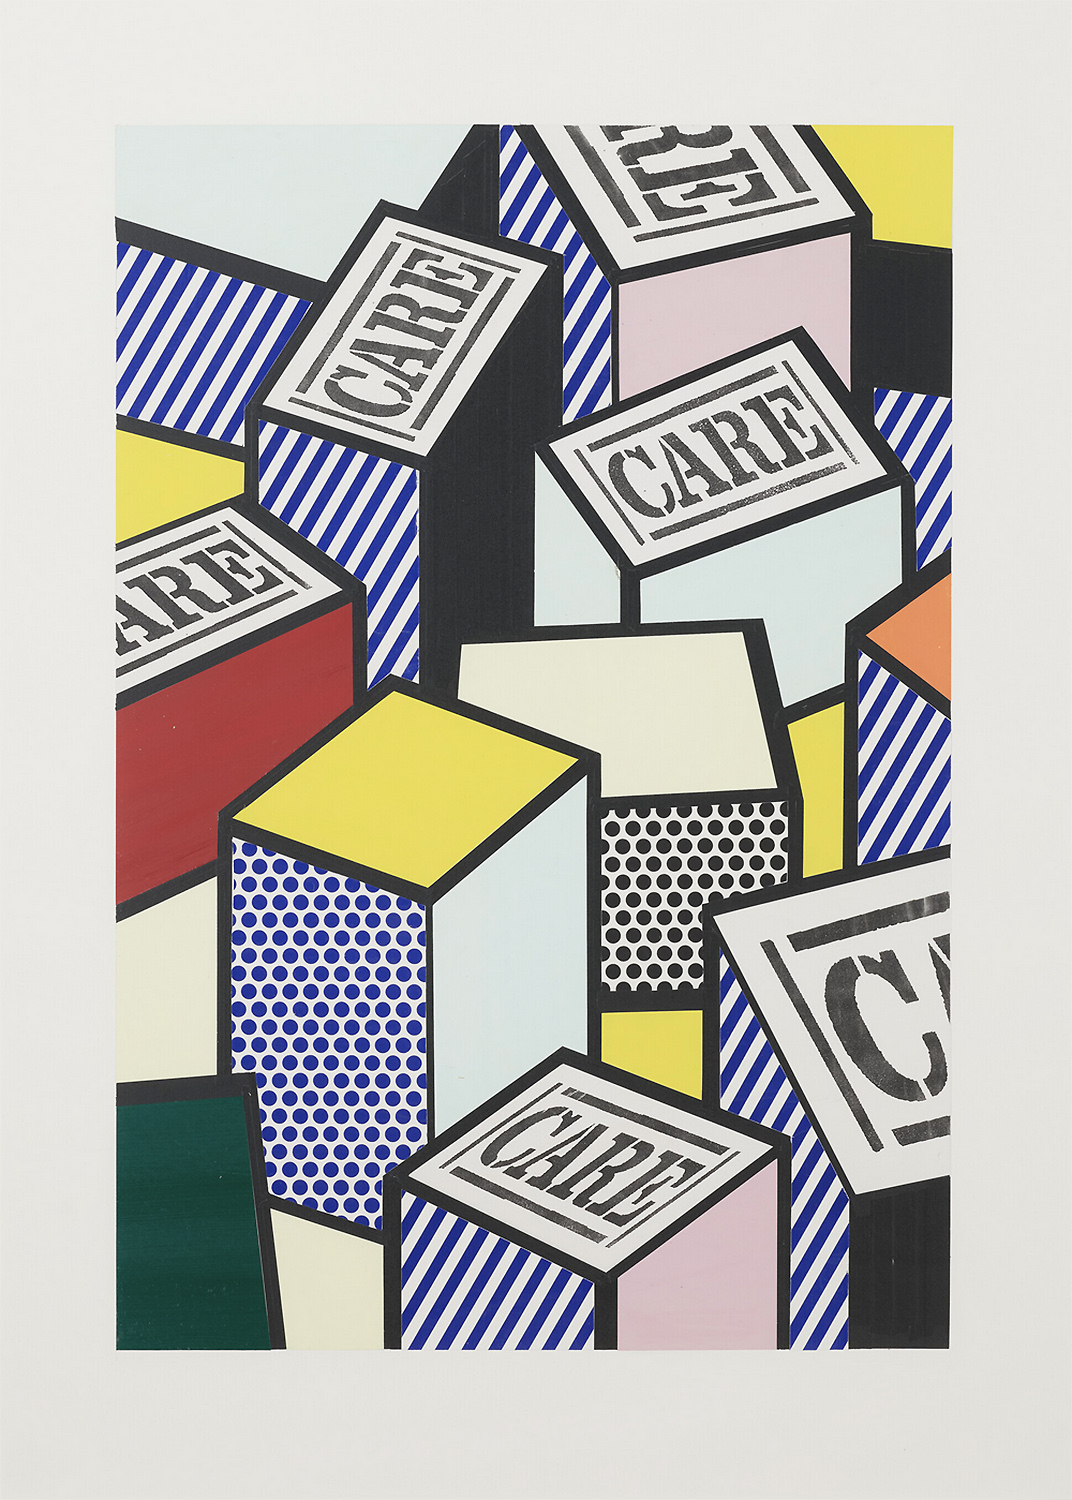 Collage by Roy Lichtenstein with blocks saying "care"